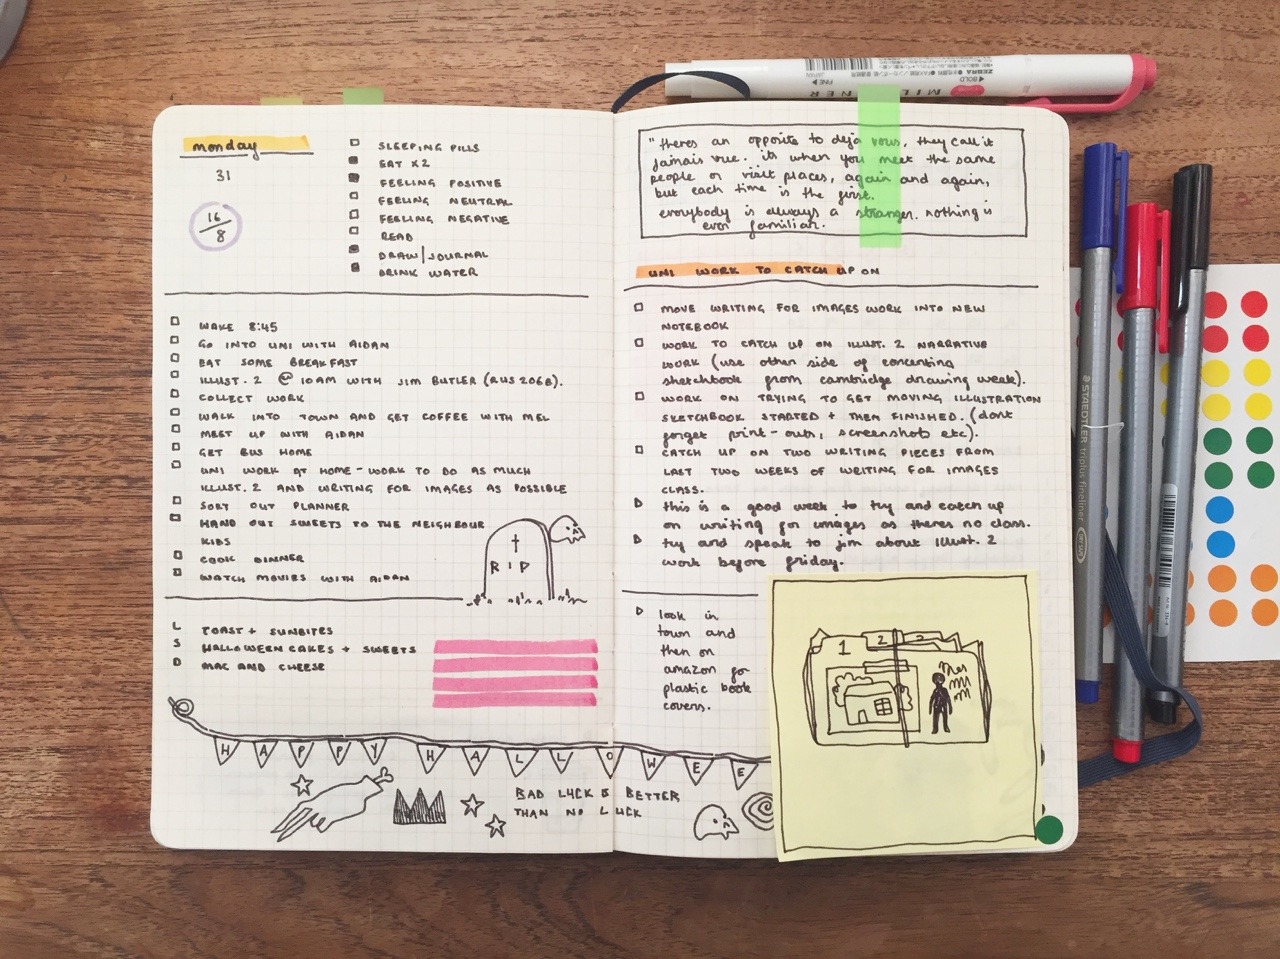 Bullet journal inspiration — baby-gloom: my new lil planner !! i've filmed  a